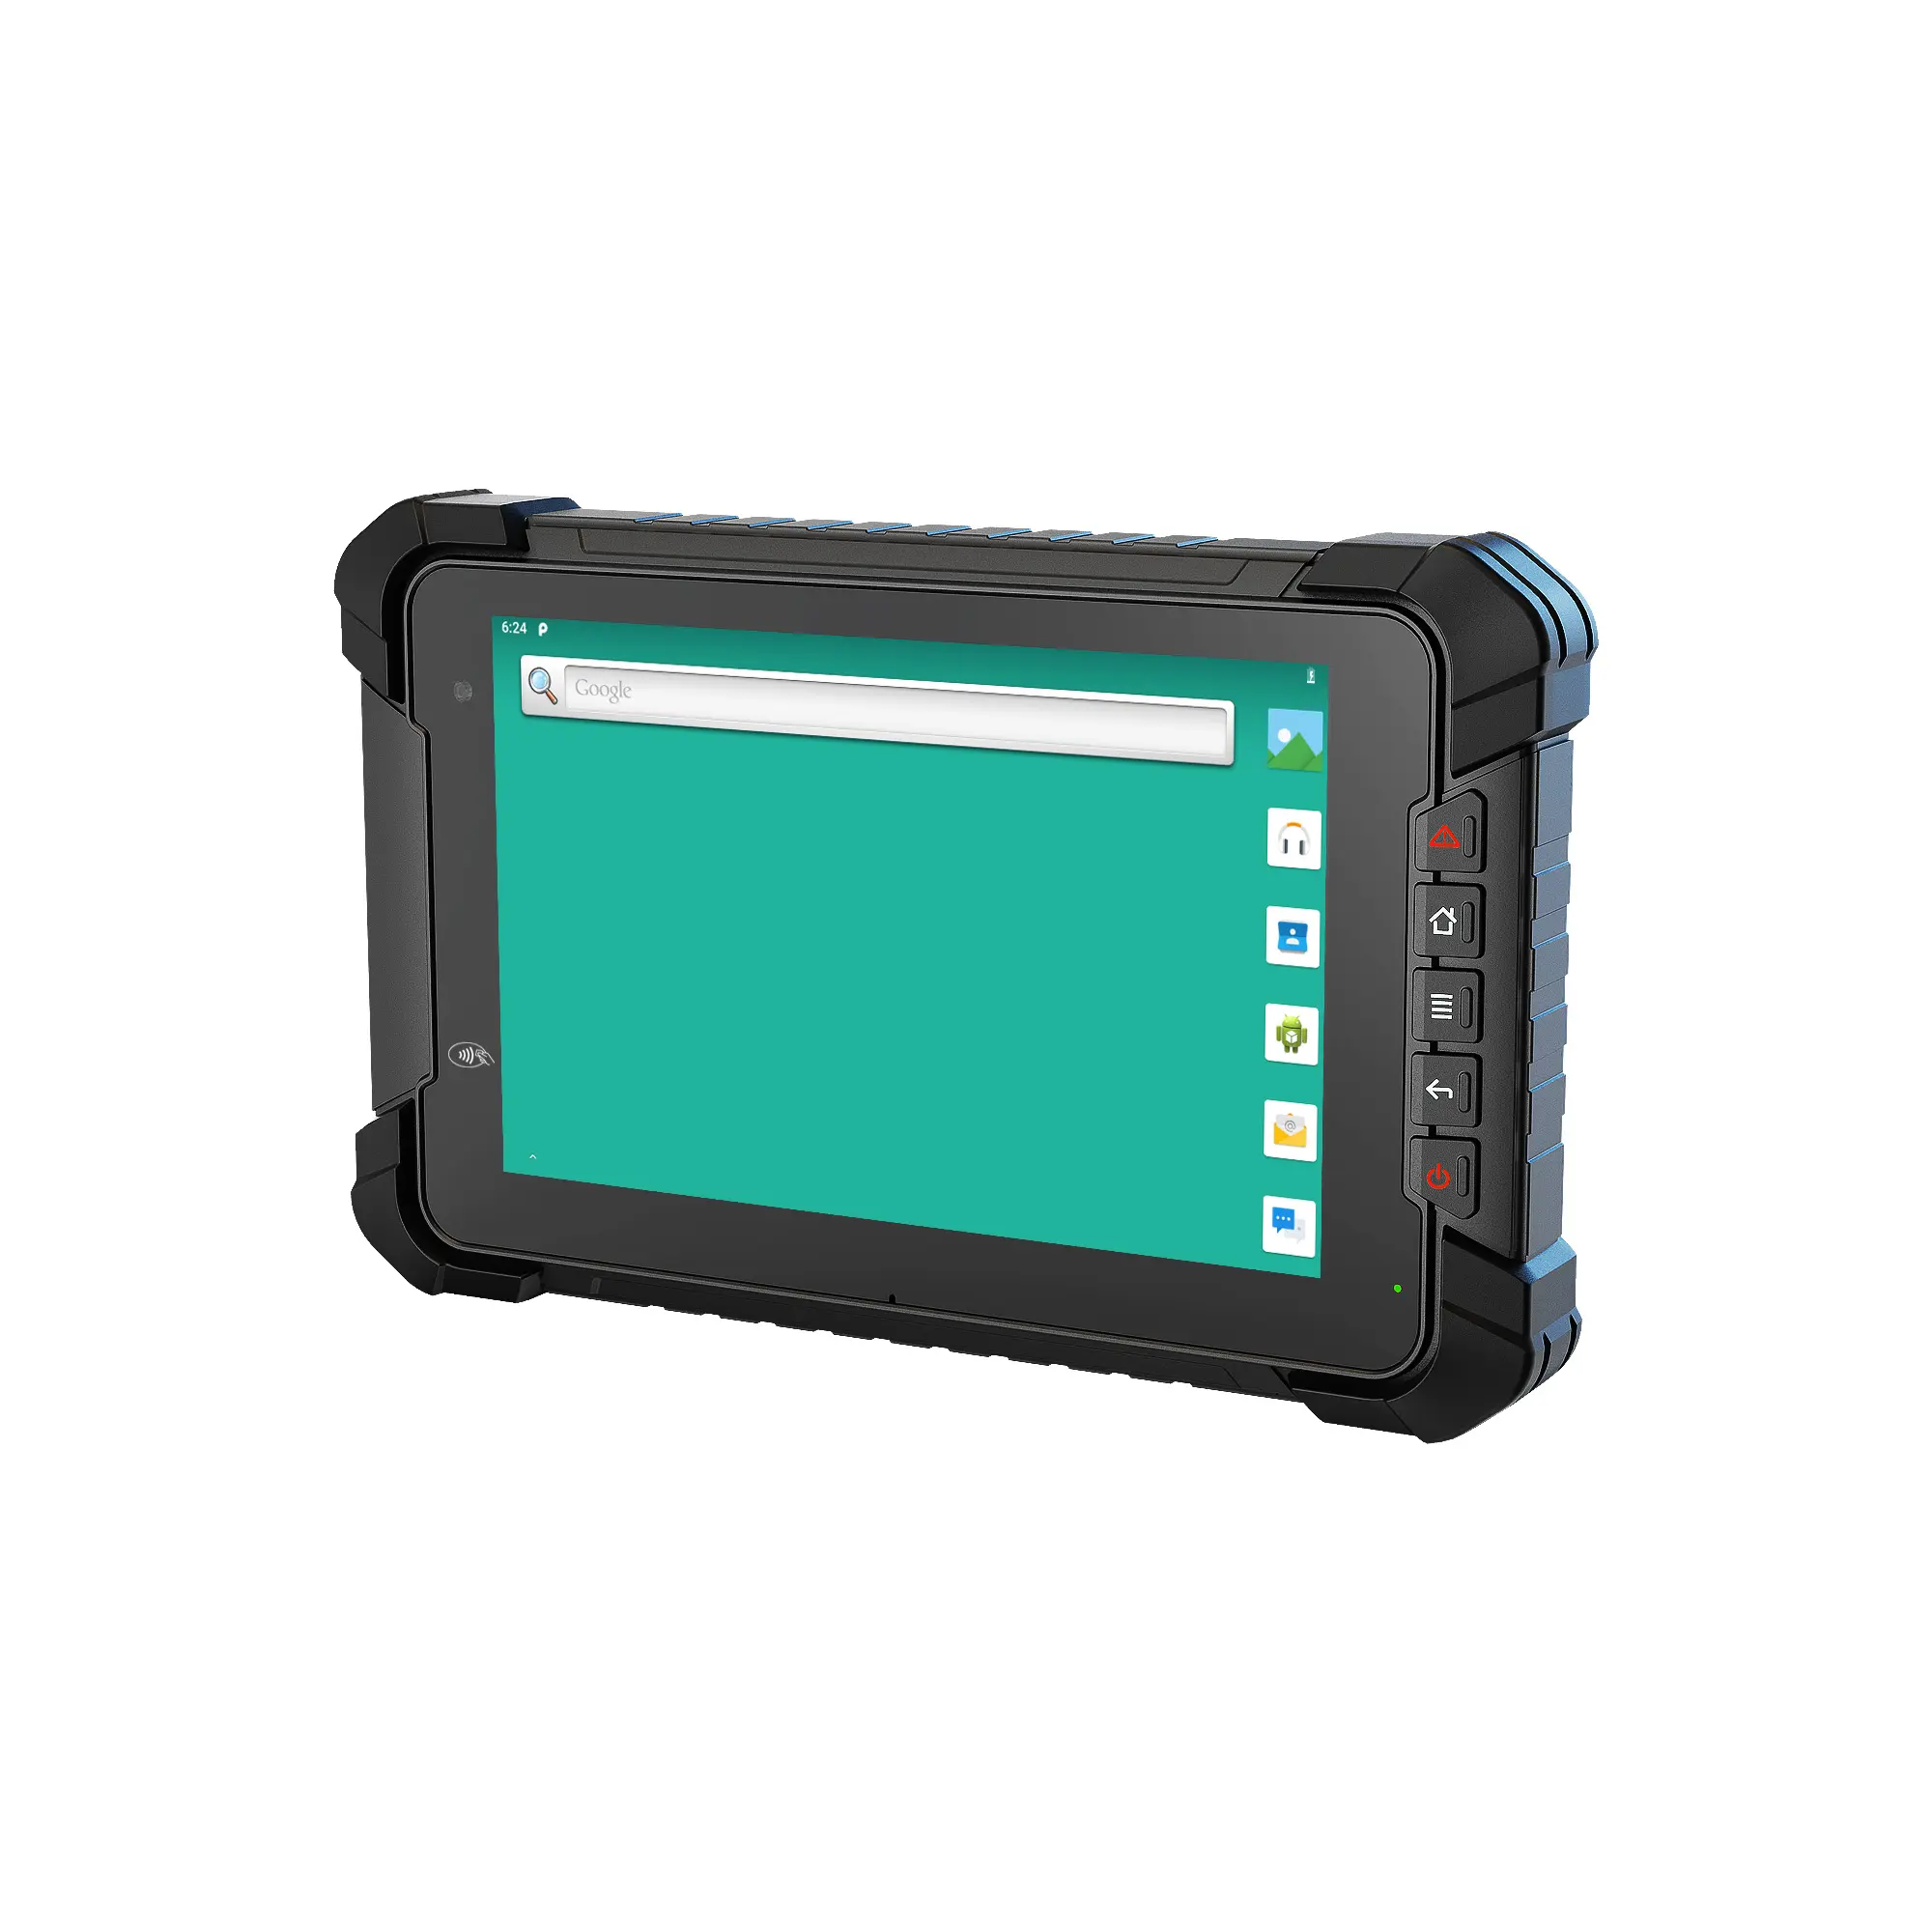 Lilliput-Tableta rugosa CANBUS para gestión de flotas de autobuses, 4G, WIFI, GPS, Beidou, monitor de vehículos, impermeable IP67, Android